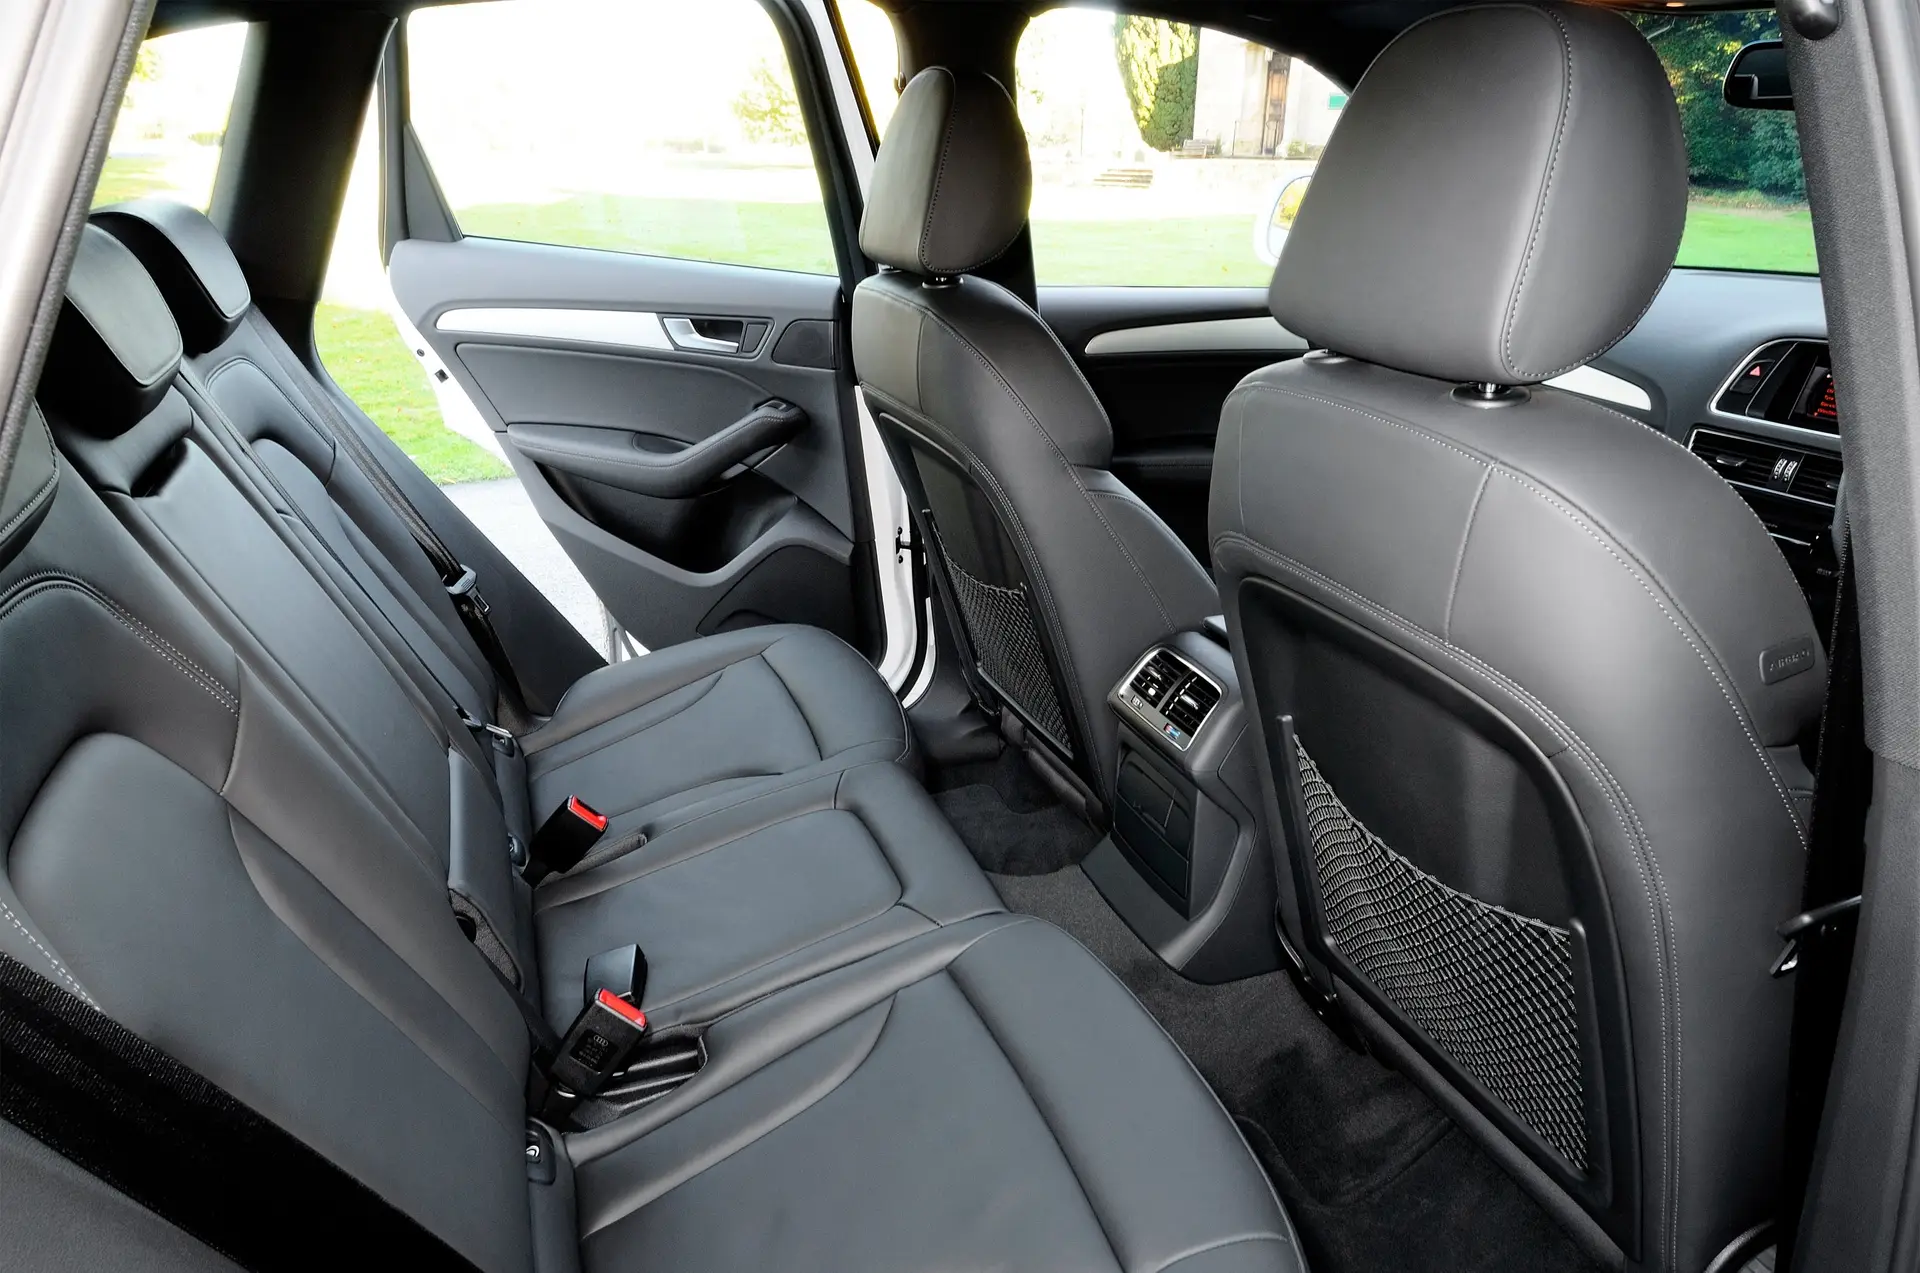 Audi Q5 (2008-2017) Review: interior close up photo of the Audi Q5 rear seats